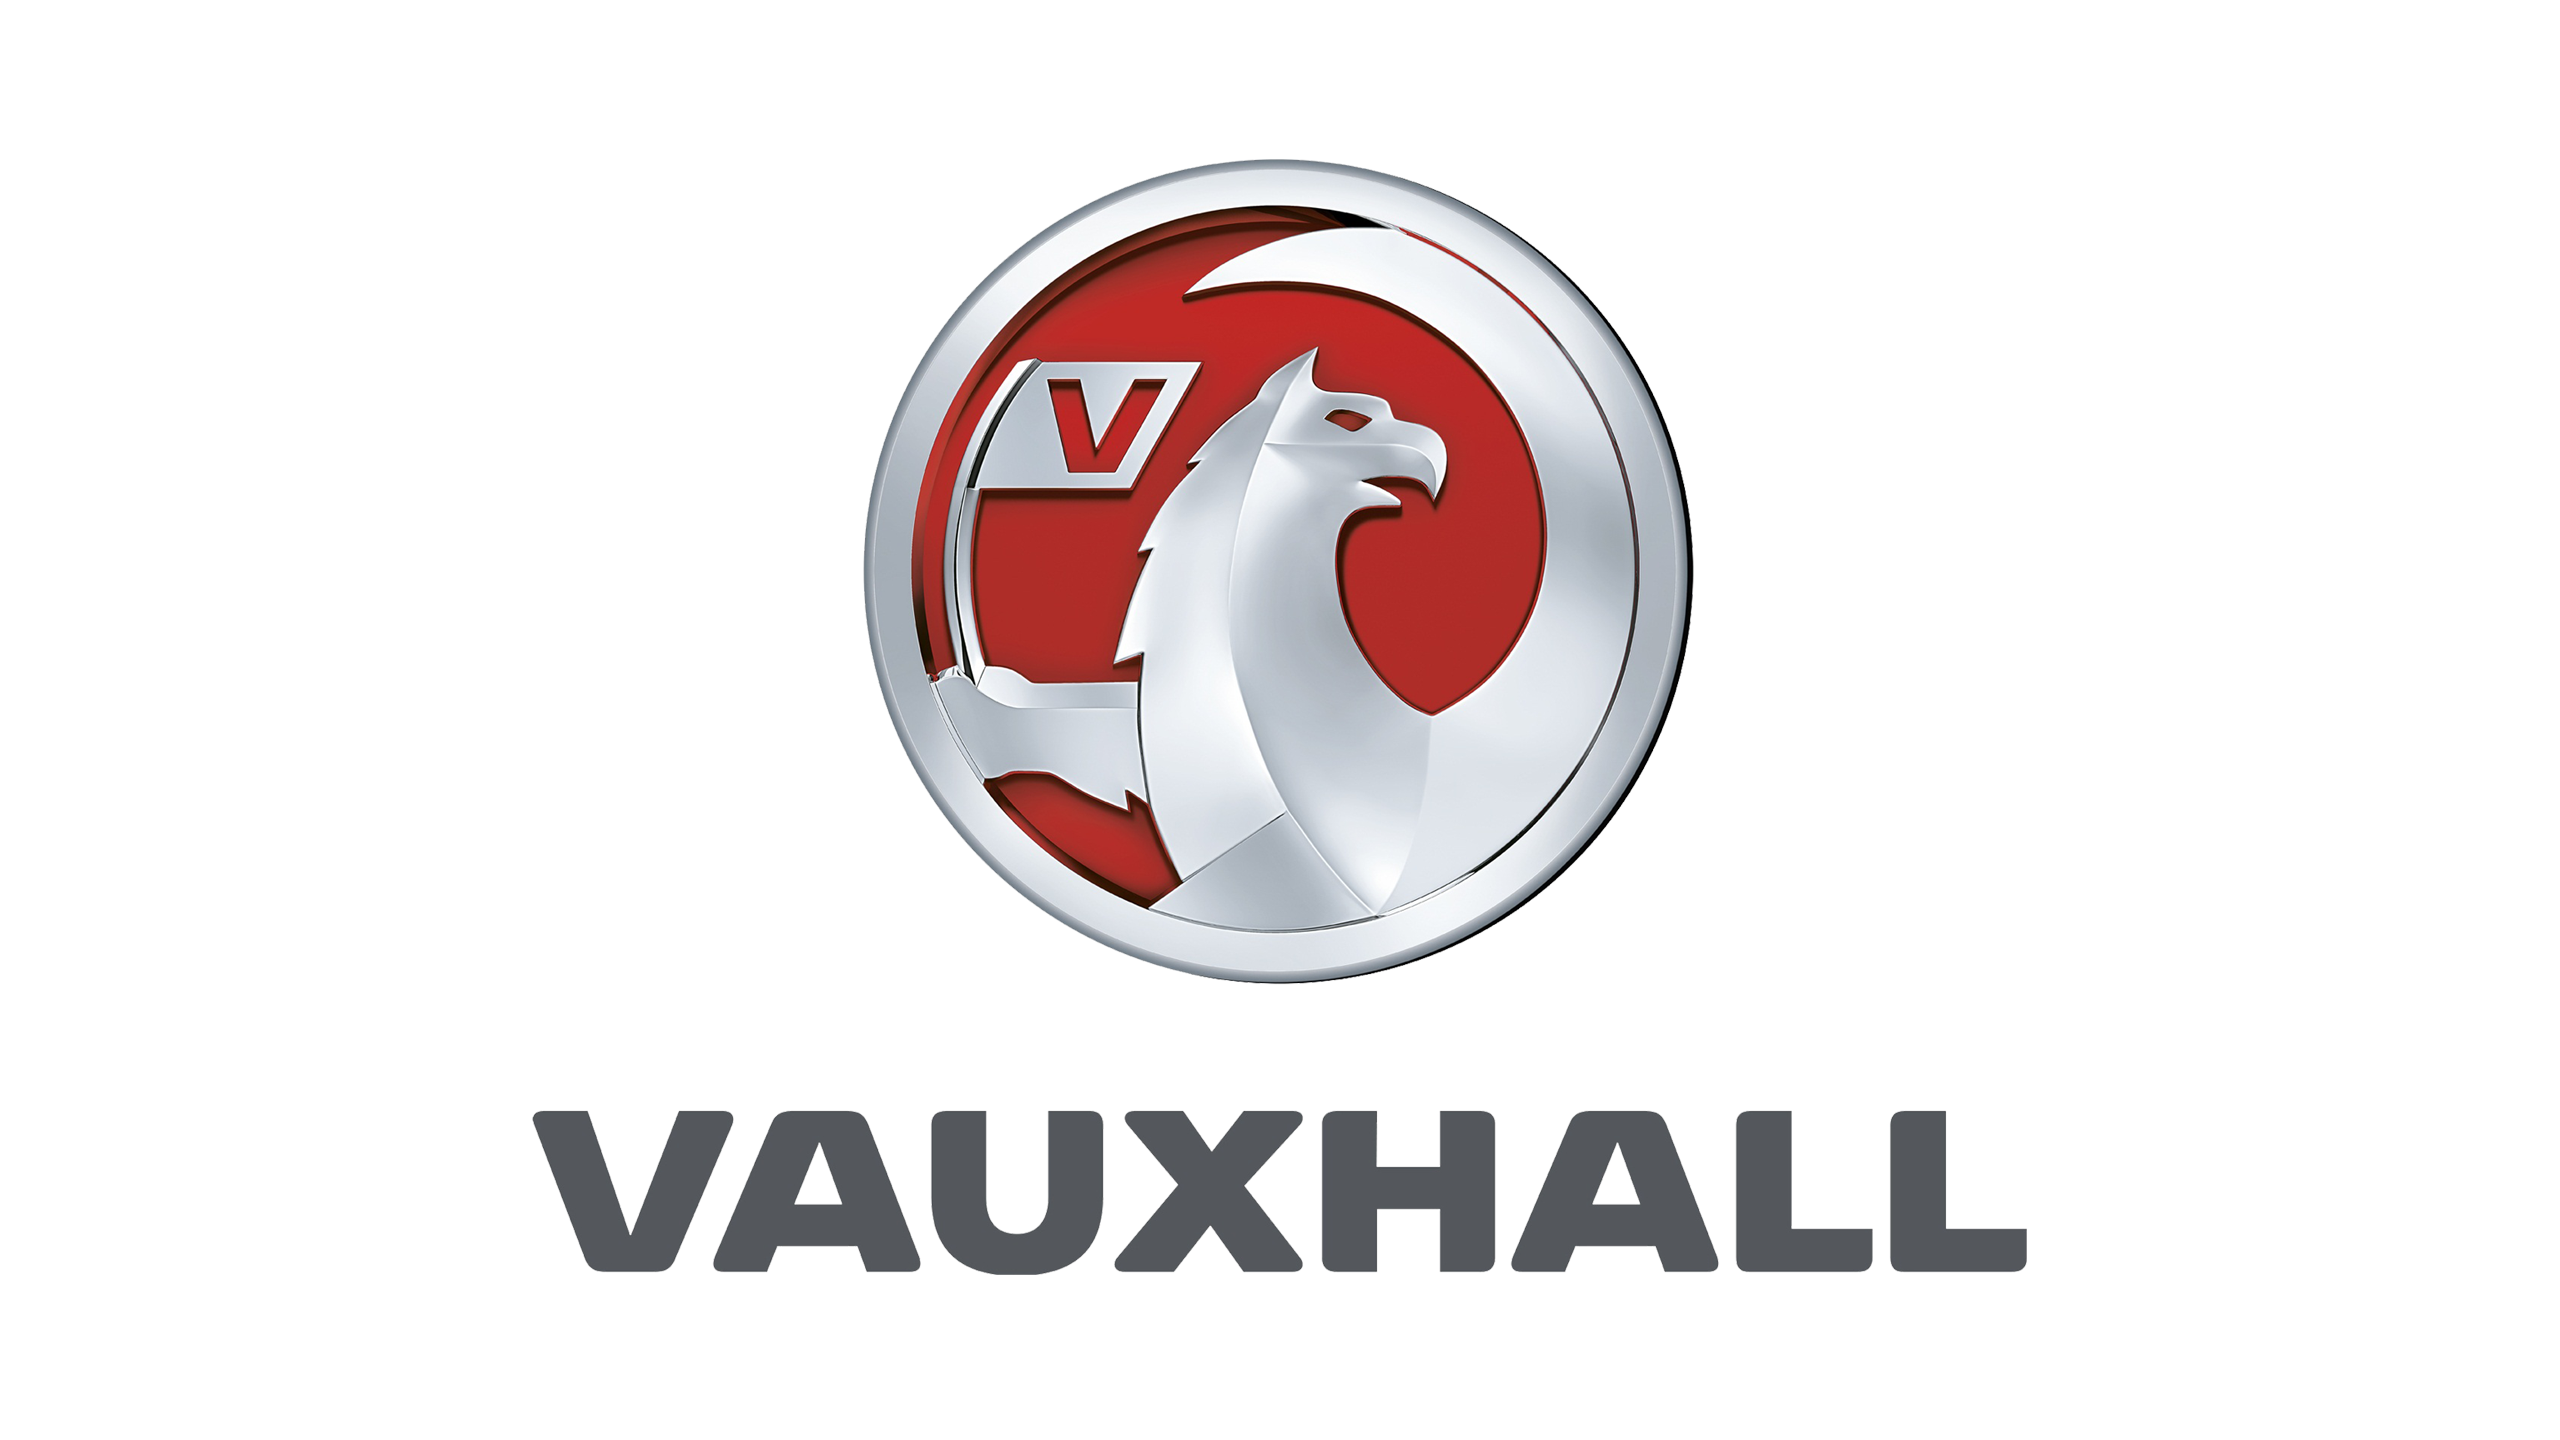 Vauxhall Accessories